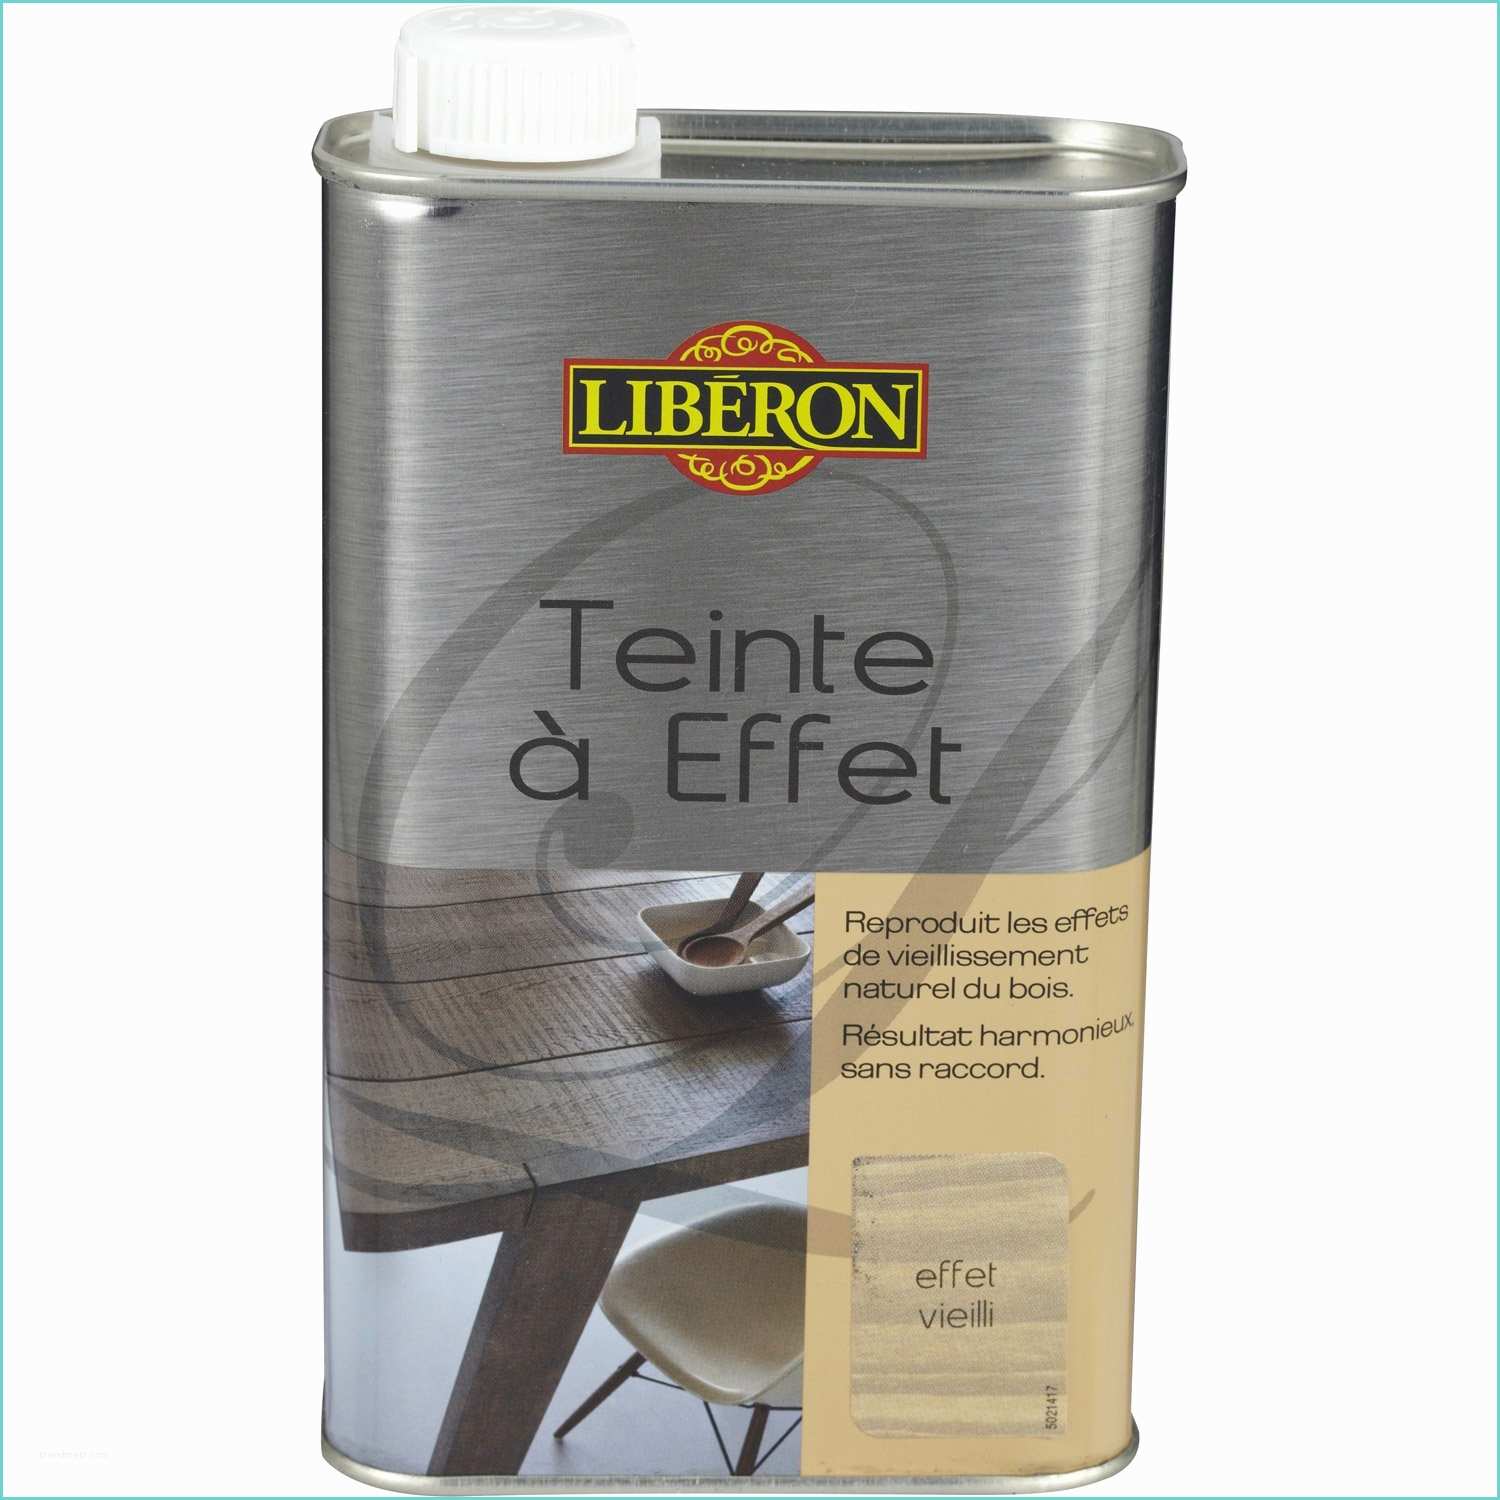 Liberon Boisine Blanc Creme Teinte à Effet Liberon 0 5 L Effet Vieilli